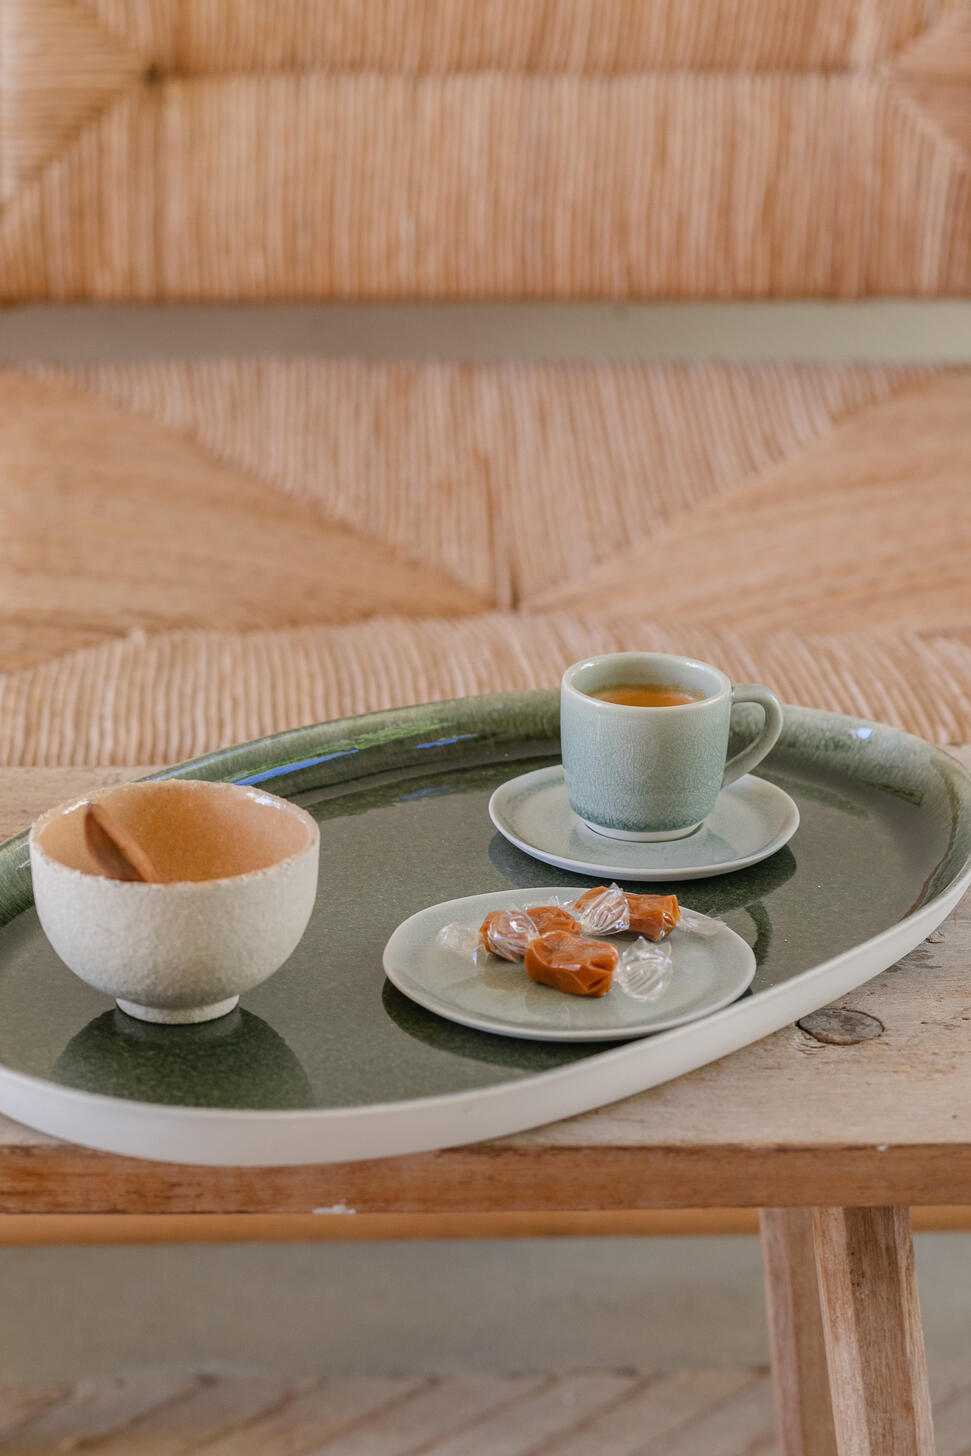 Espresso cup & saucer Maguelone cachemire high end ceramics